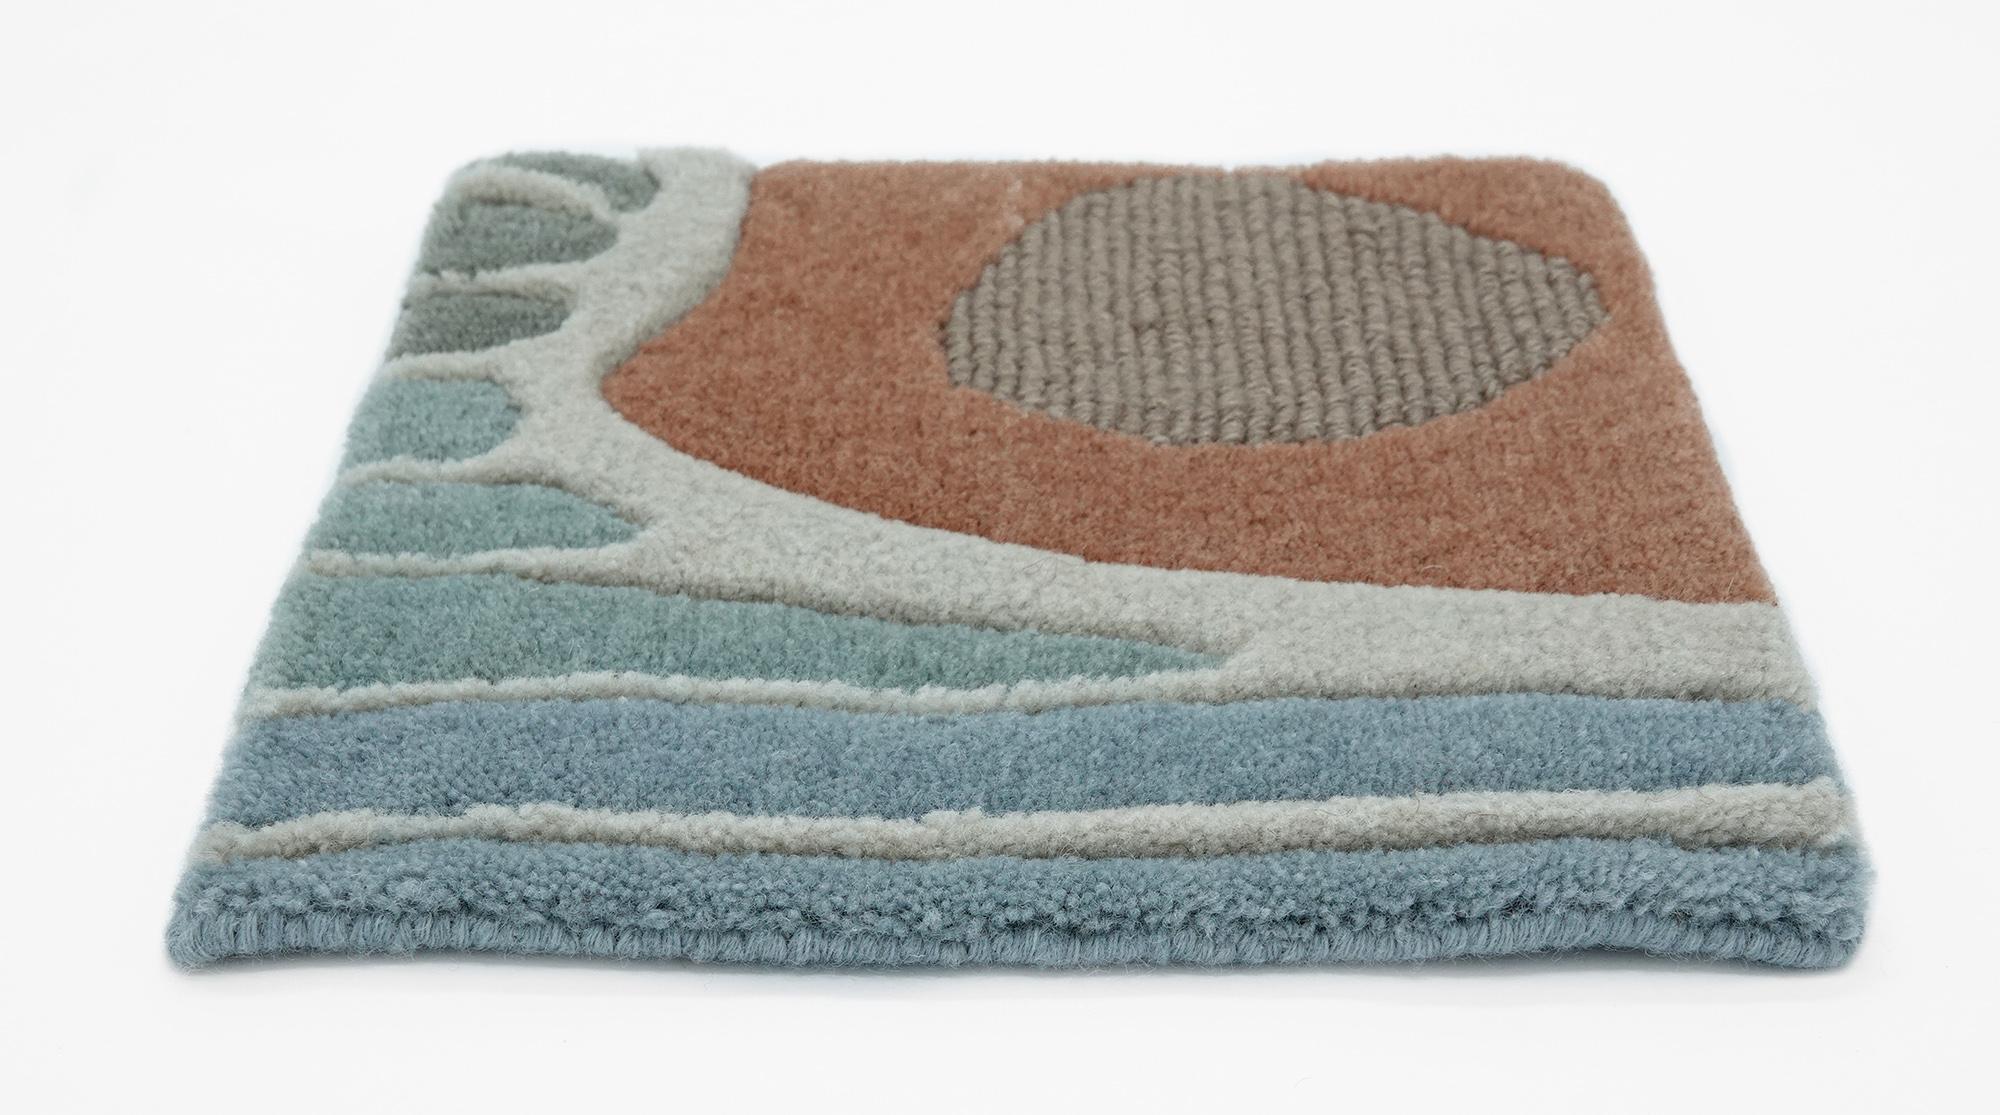 Modern colofrul unusual rug Multicolored Irregular shape, Gamma Est small For Sale 5